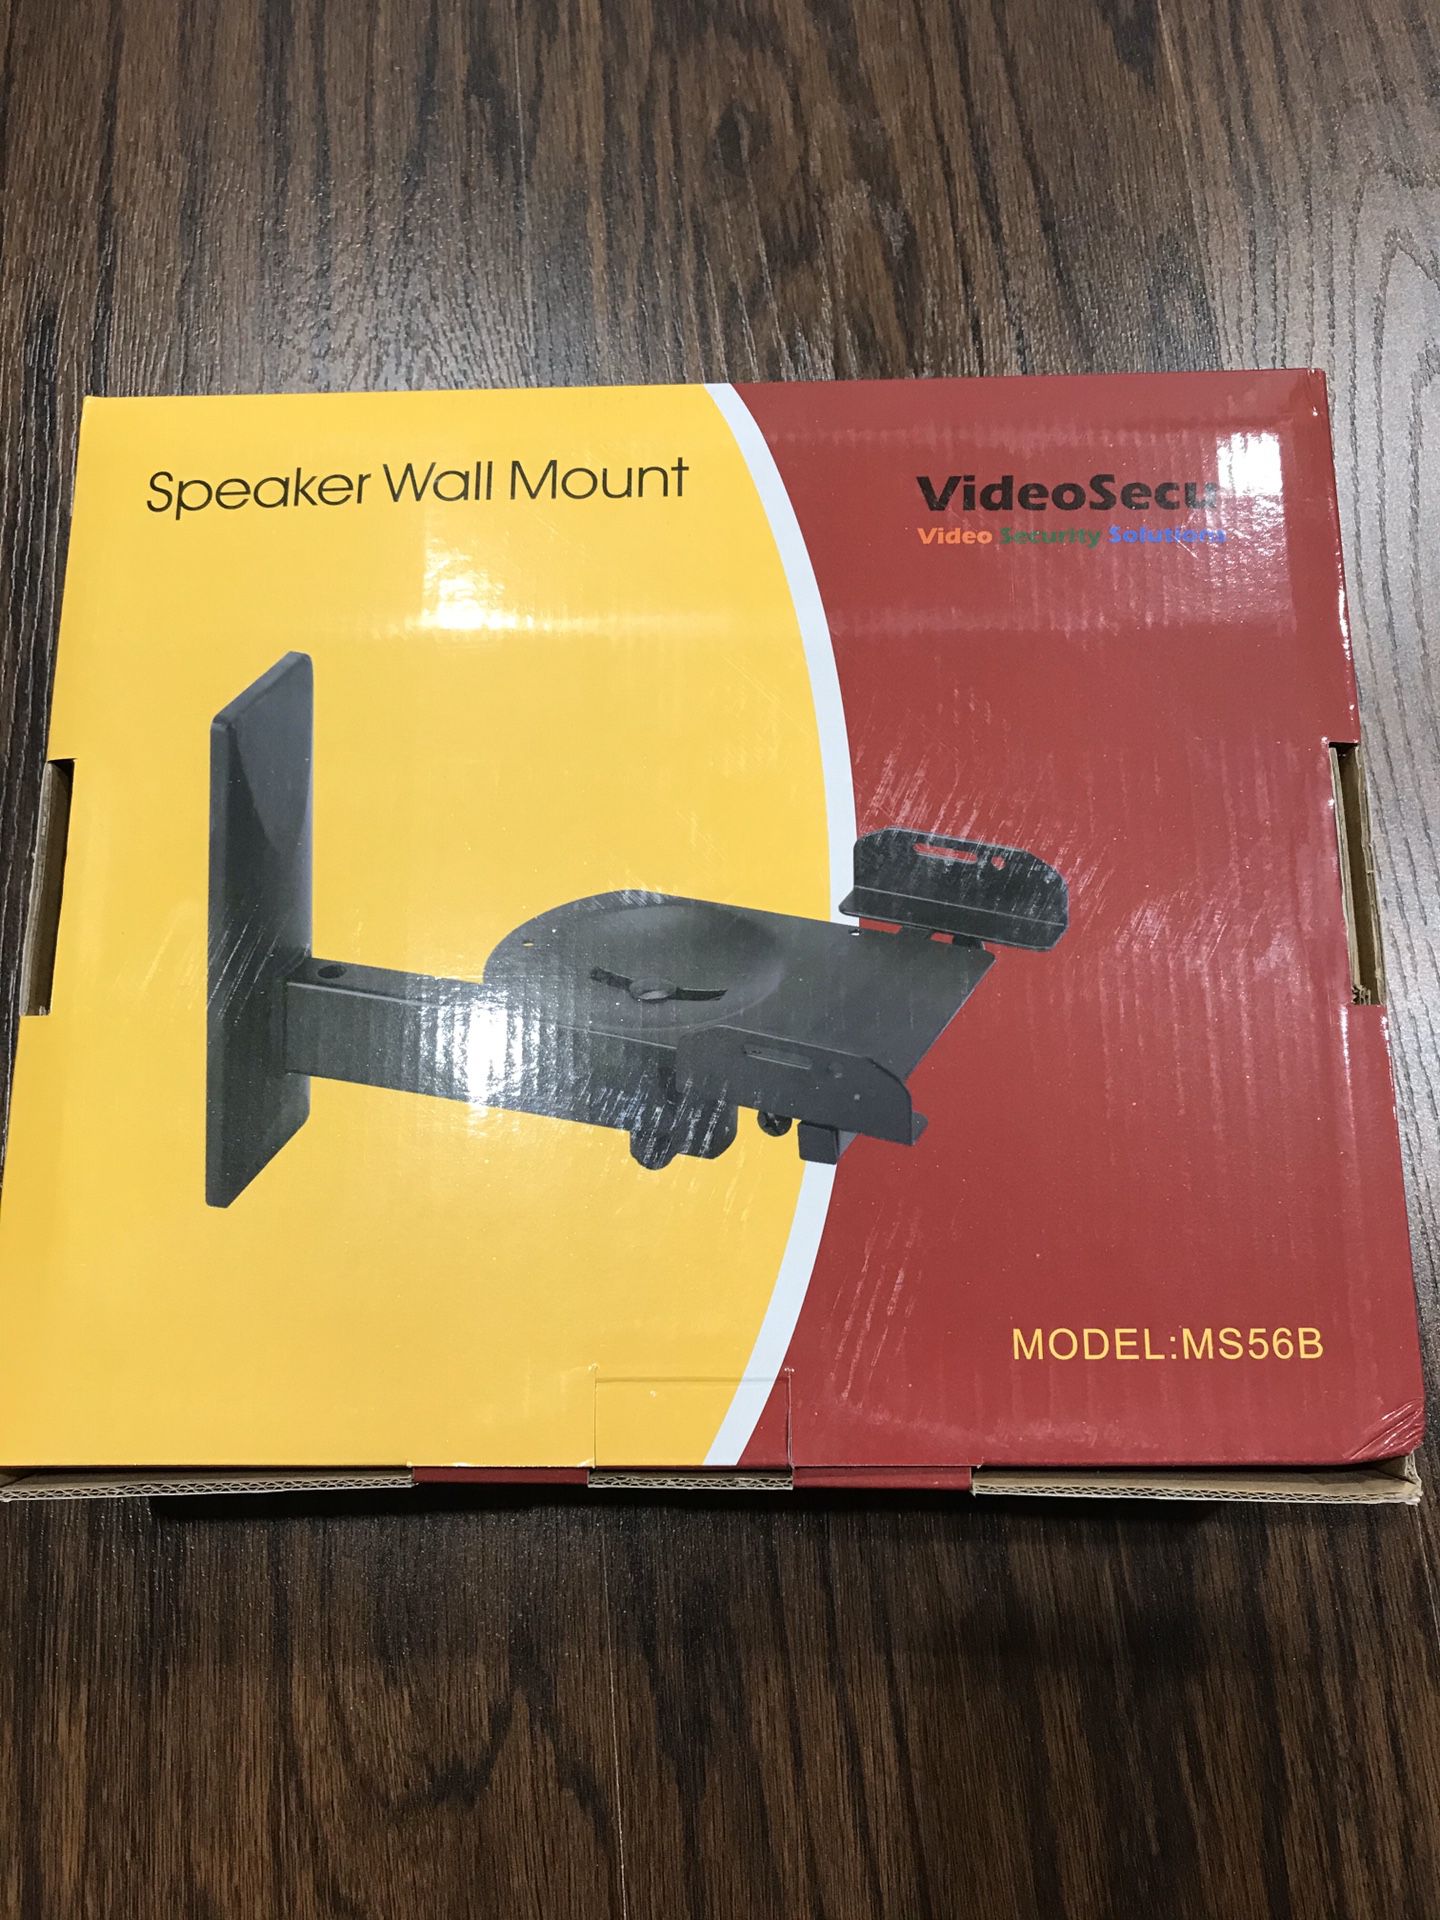 Videosecu speaker wall mount